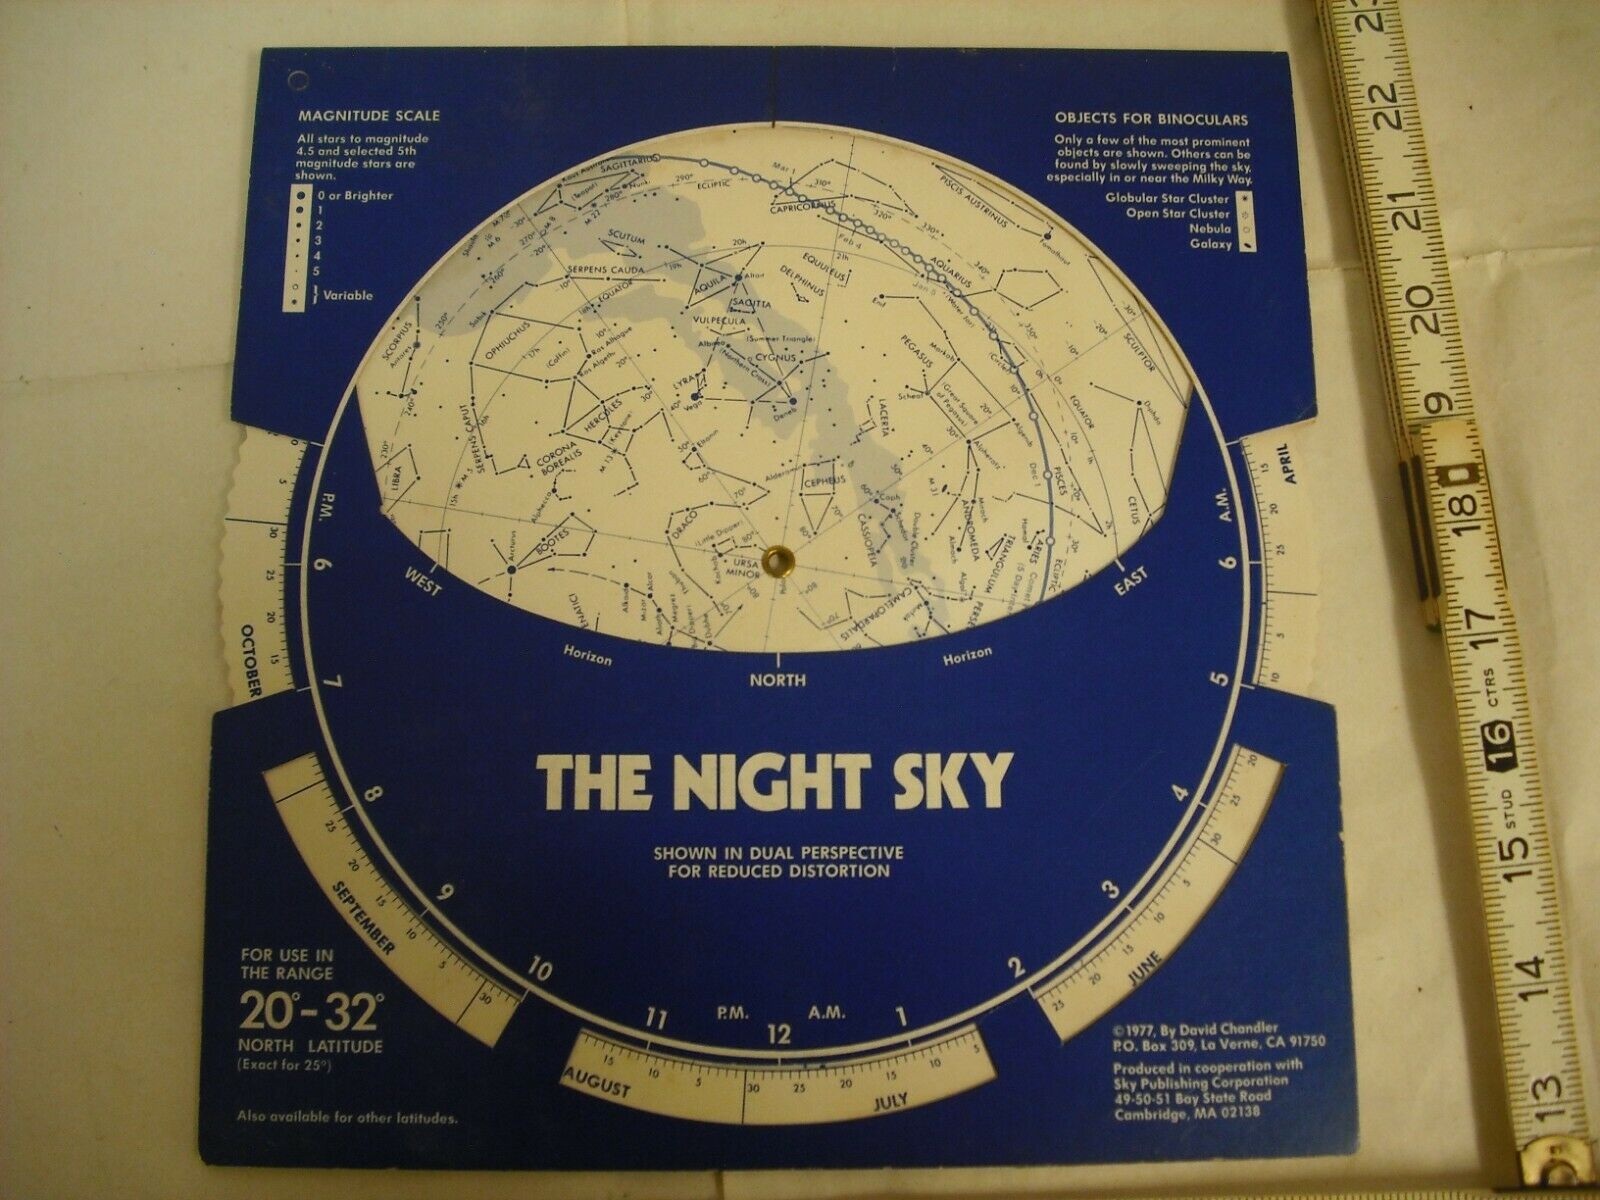 The Night Sky Star Wheel For 20-32°n Latitude, Exact For 25°n